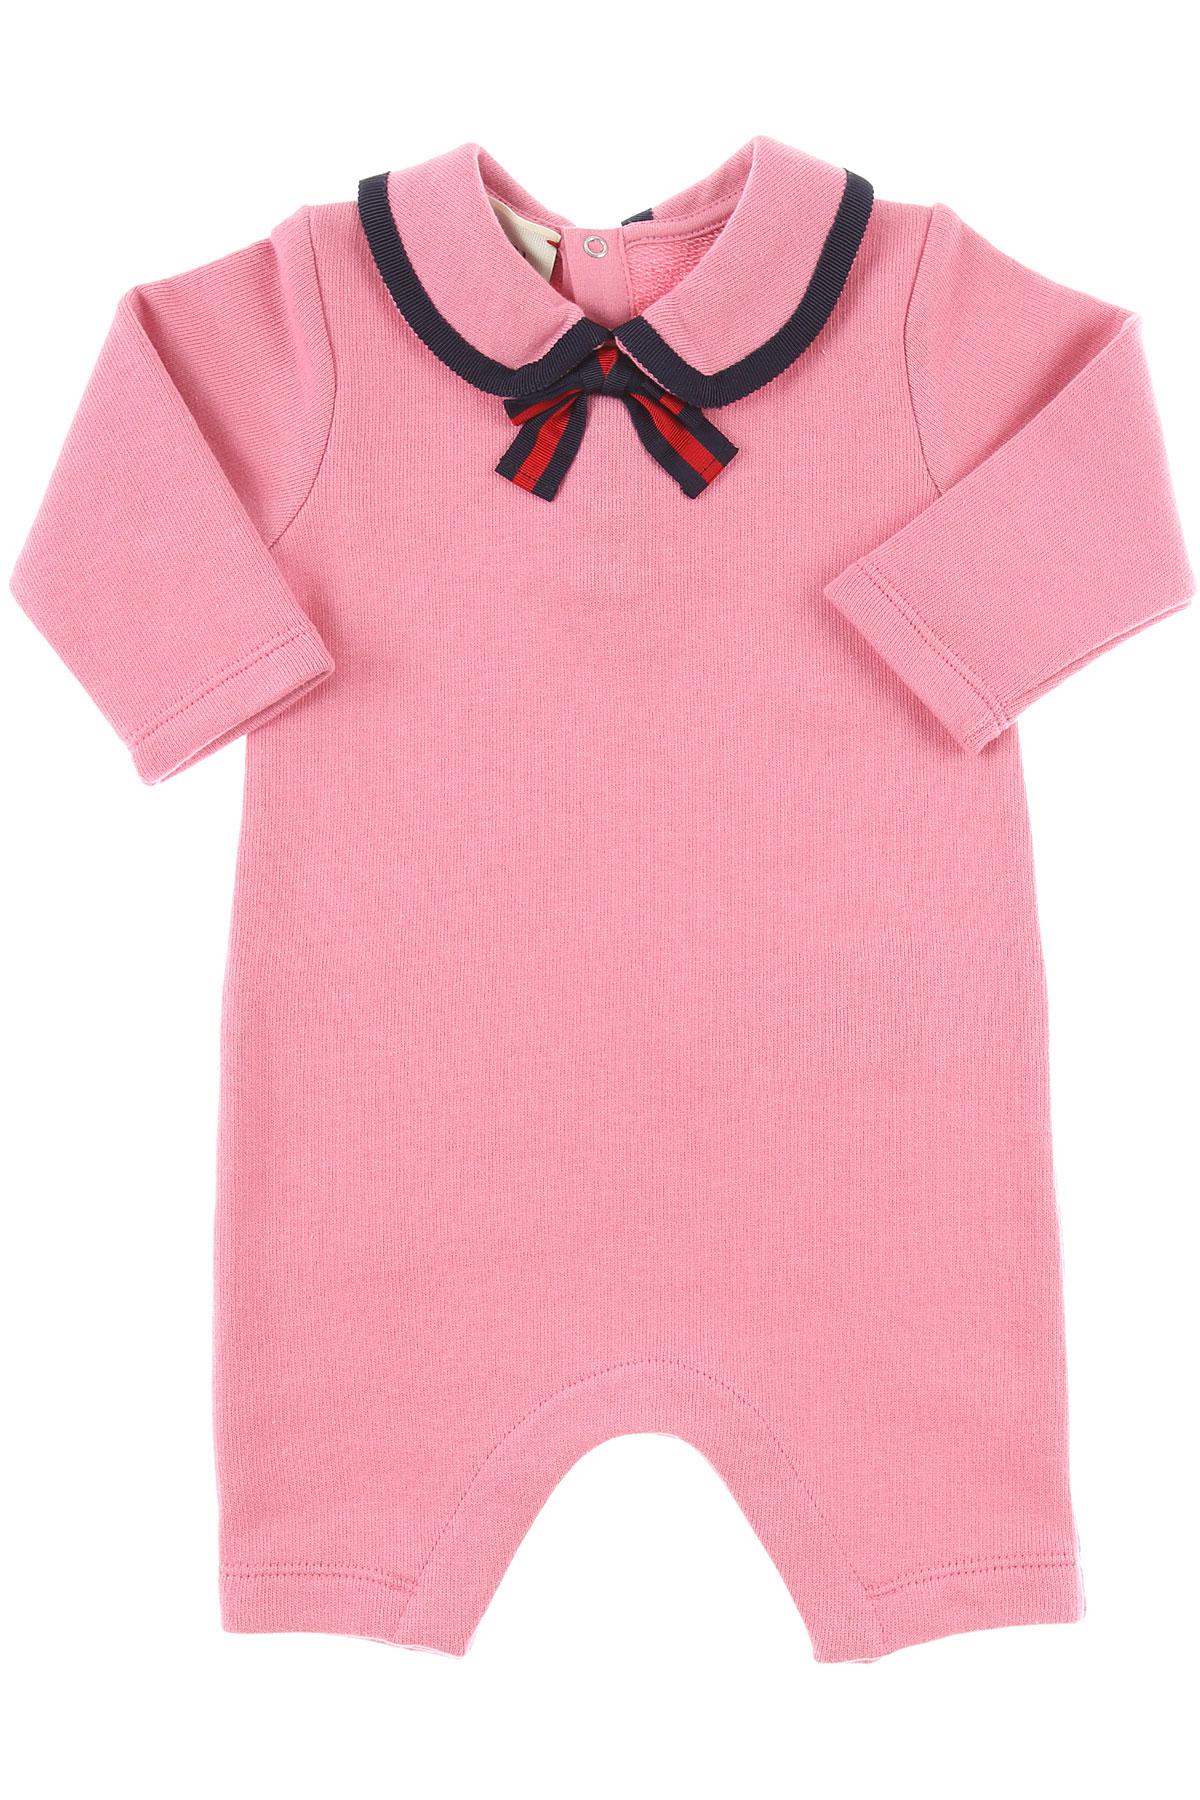 gucci baby dress sale